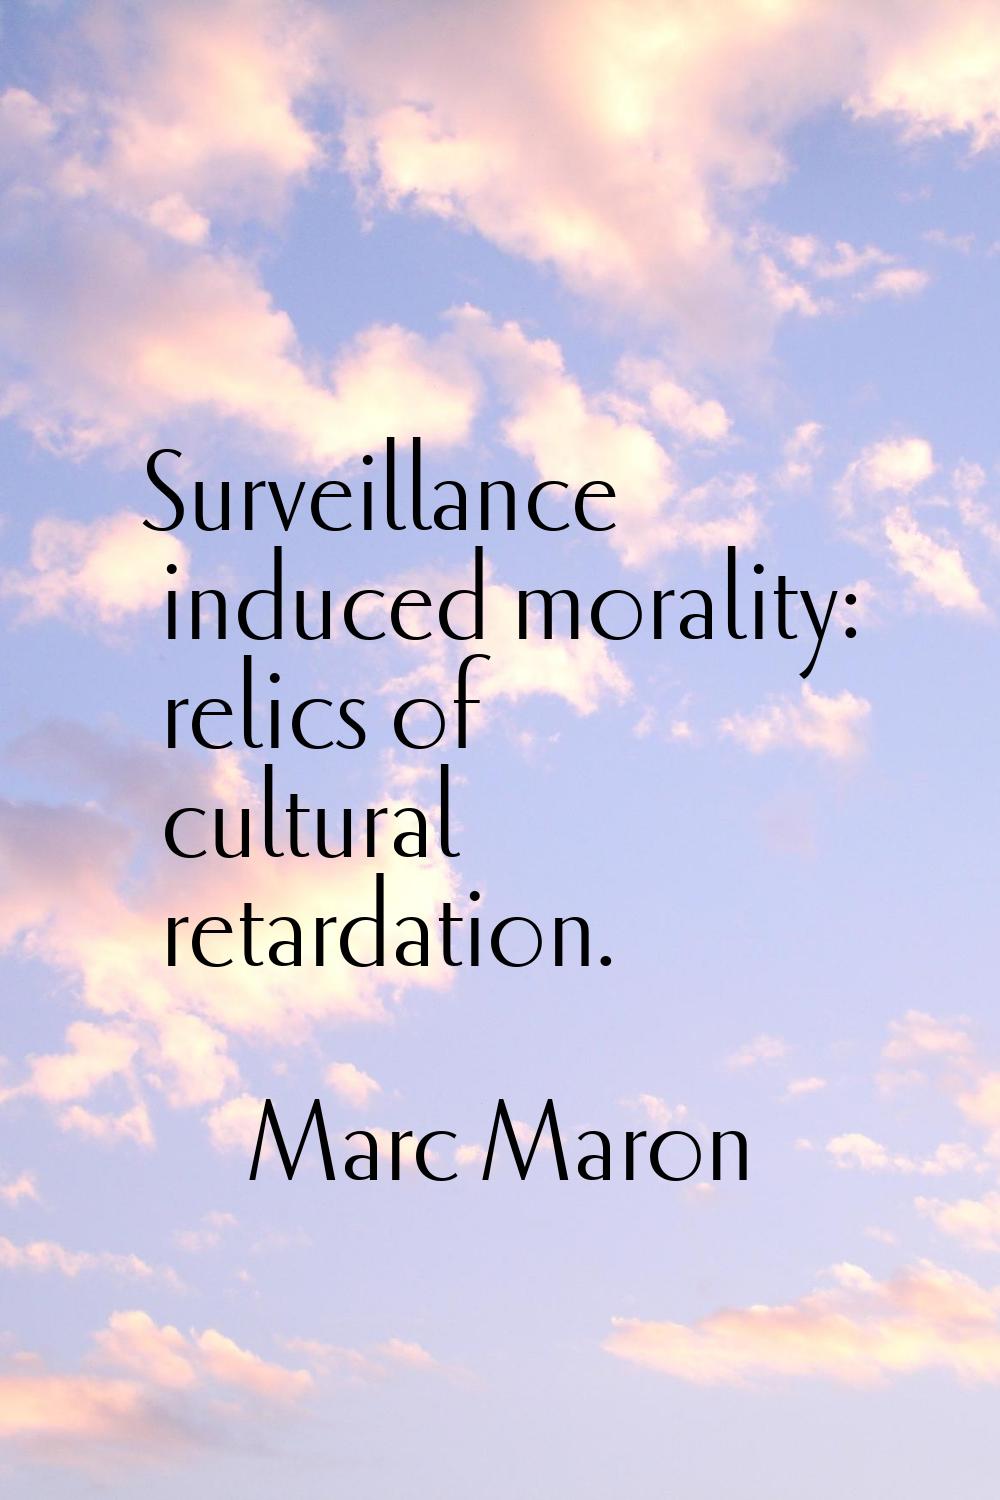 Surveillance induced morality: relics of cultural retardation.